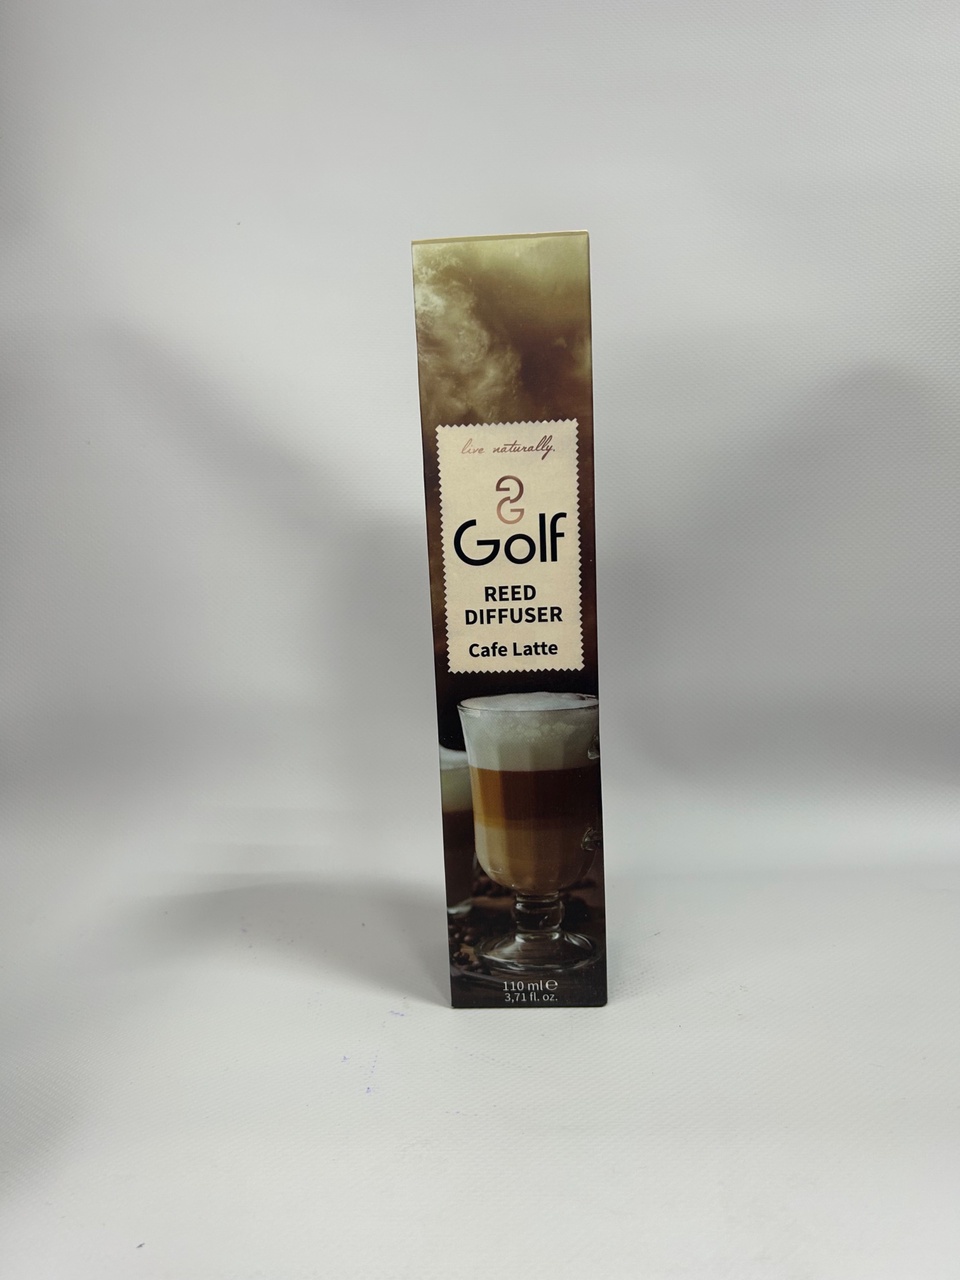 Ароматический диффузор Golf “Латте”, 110ml - 550 ₽, заказать онлайн.